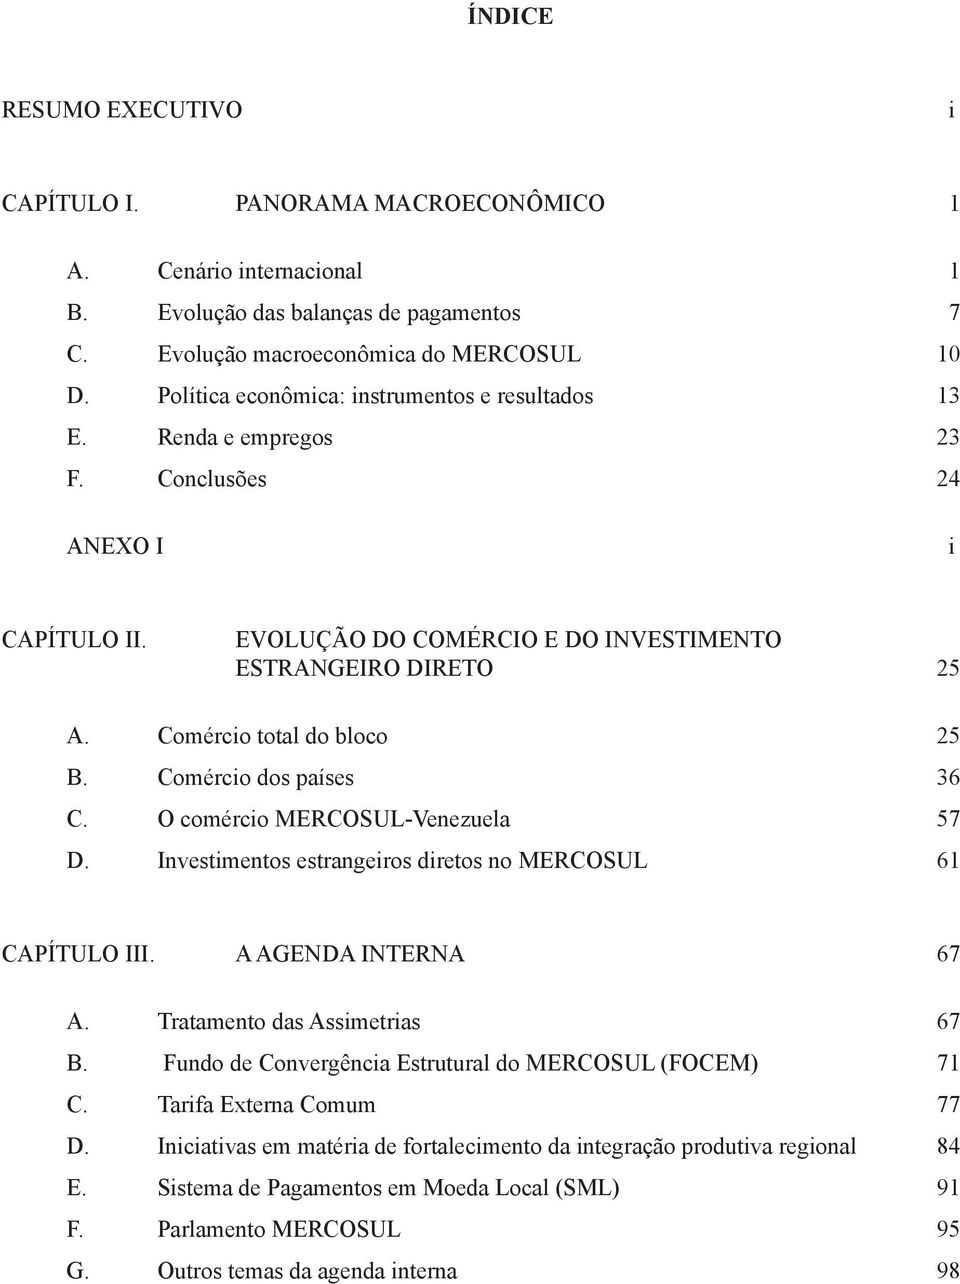 Comércio total do bloco 25 B. Comércio dos países 36 C. O comércio MERCOSUL-Venezuela 57 D. Investimentos estrangeiros diretos no MERCOSUL 61 CAPÍTULO III. A AGENDA INTERNA 67 A.